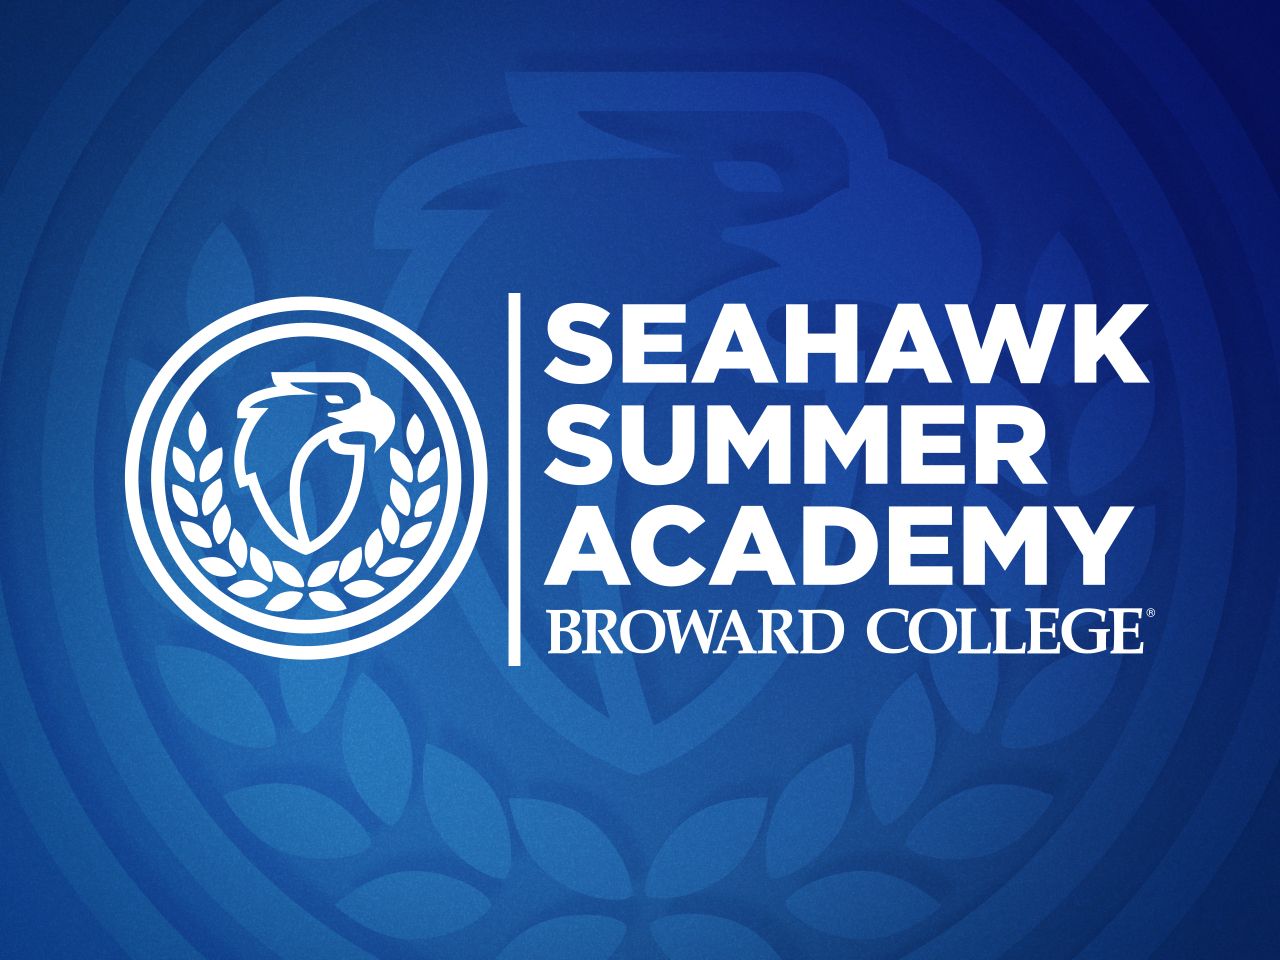 Seahawk Summer Academy